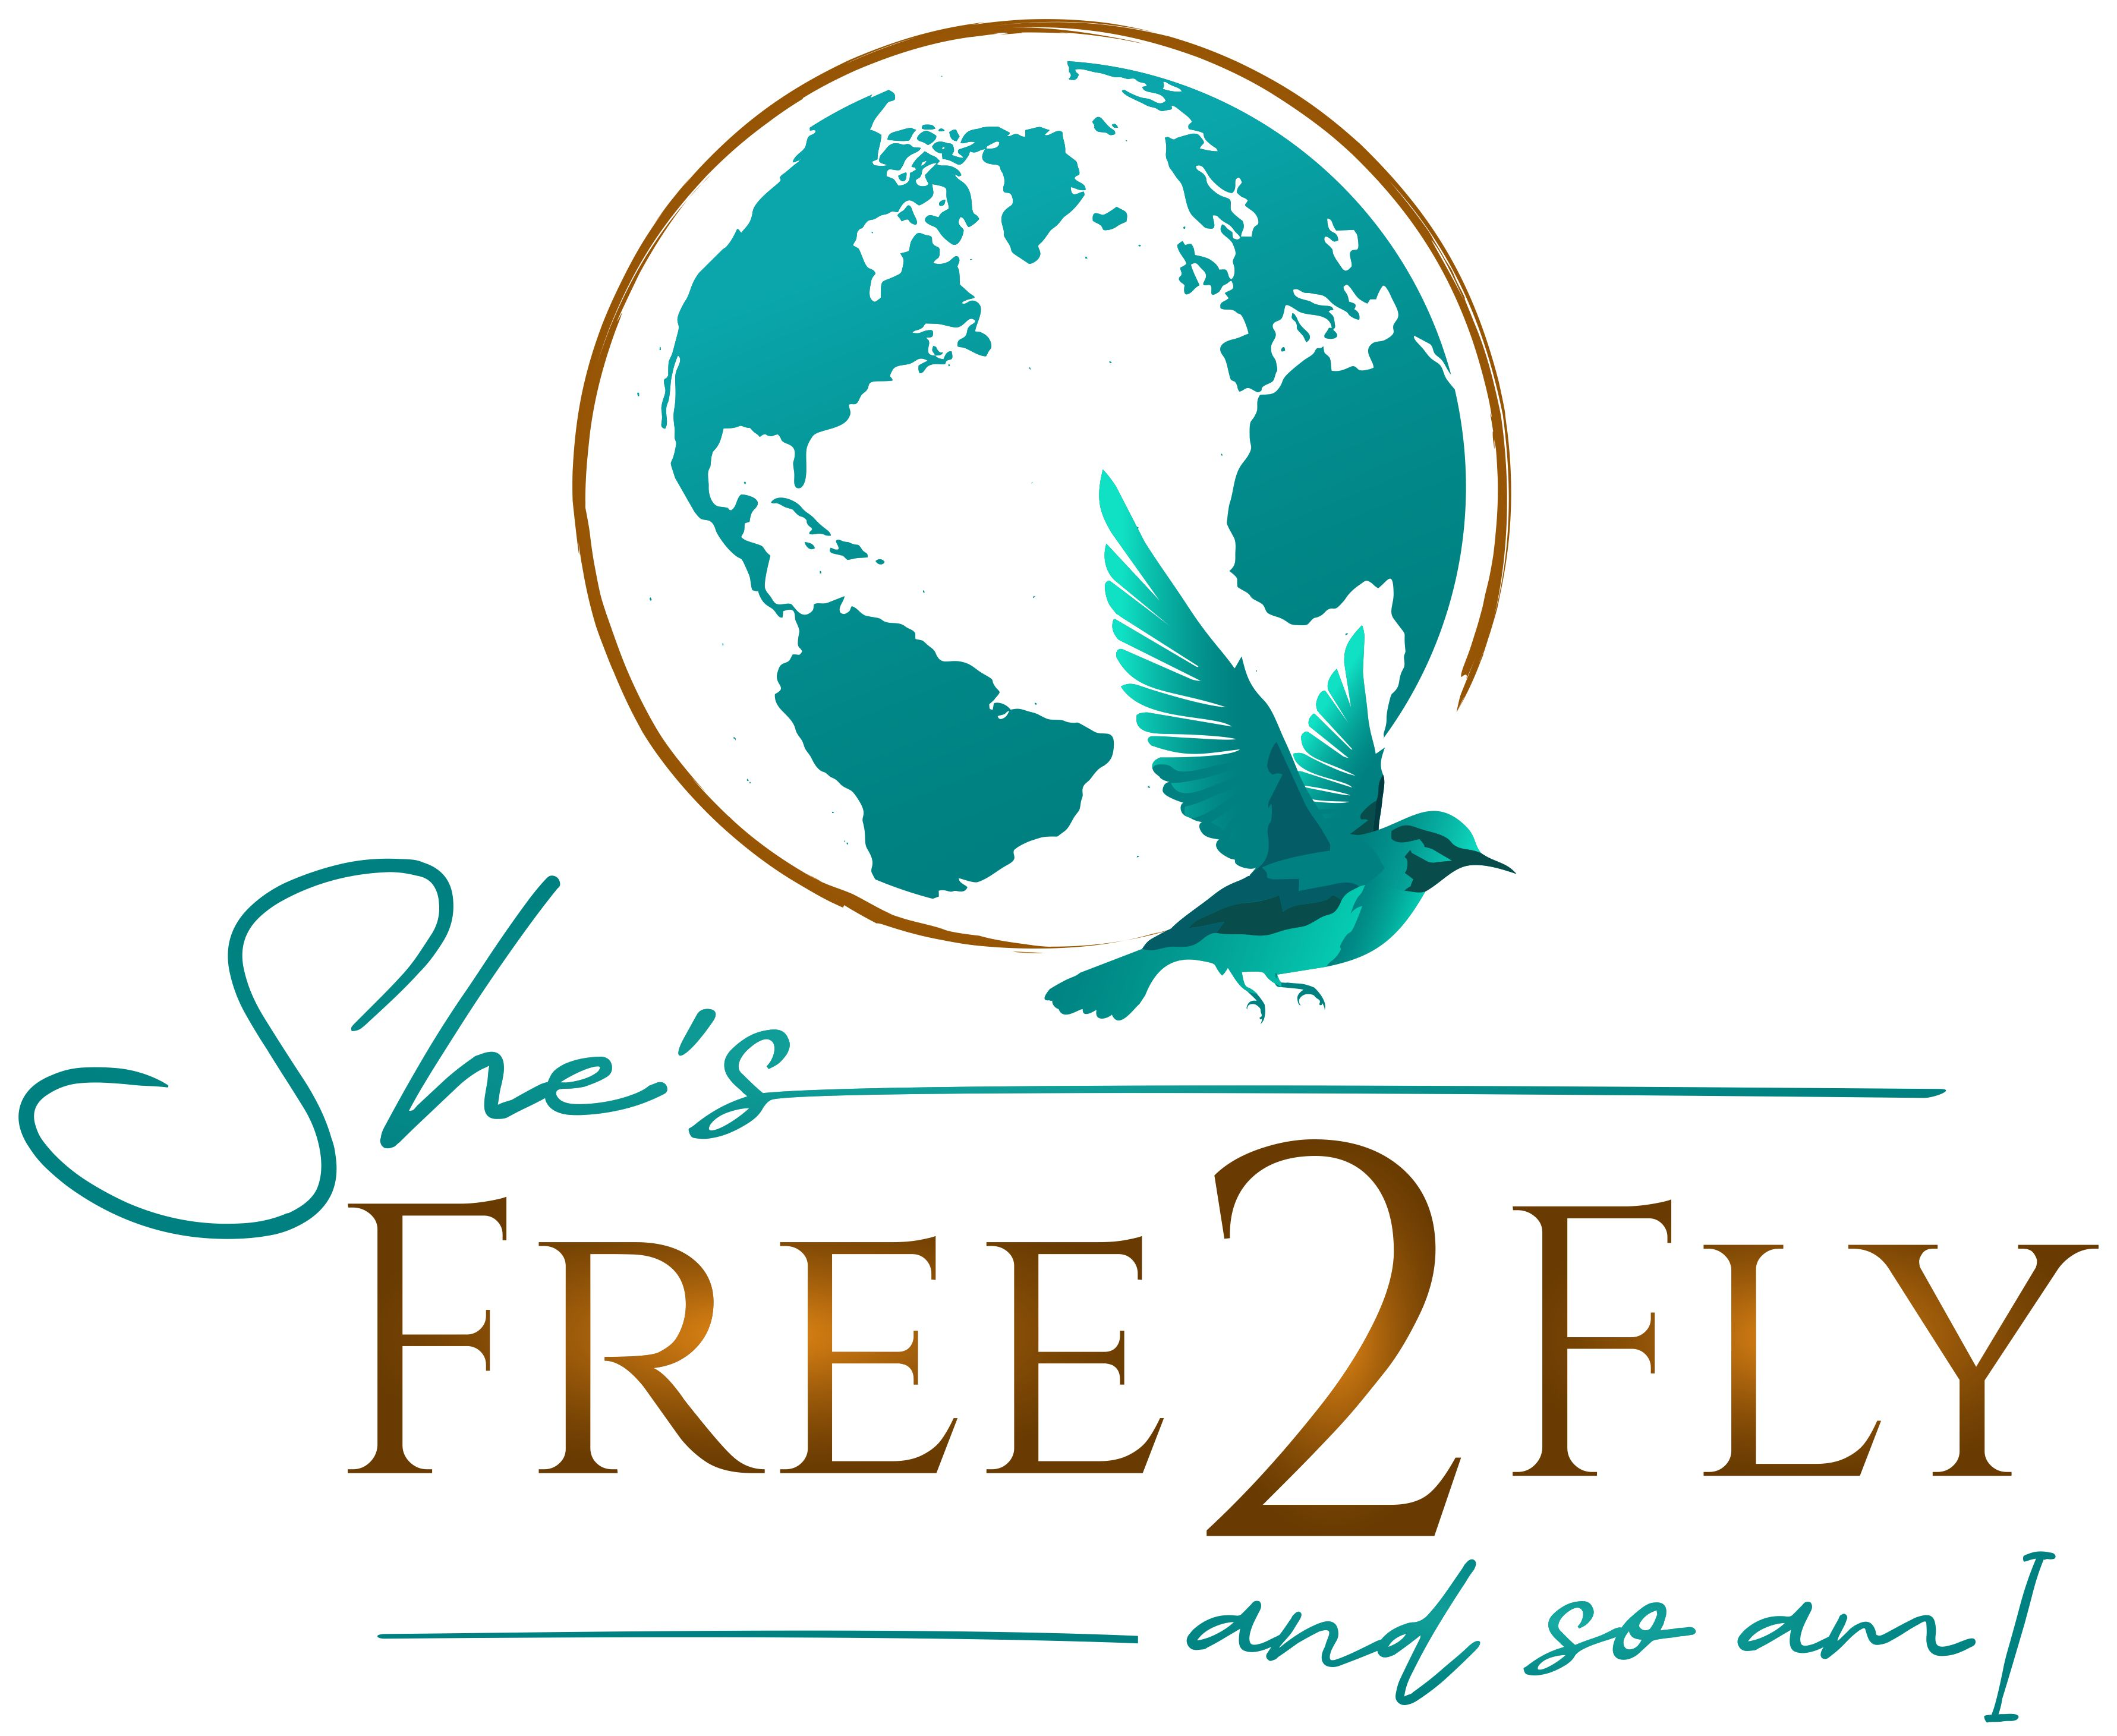 She's Free2Fly: And So Am I